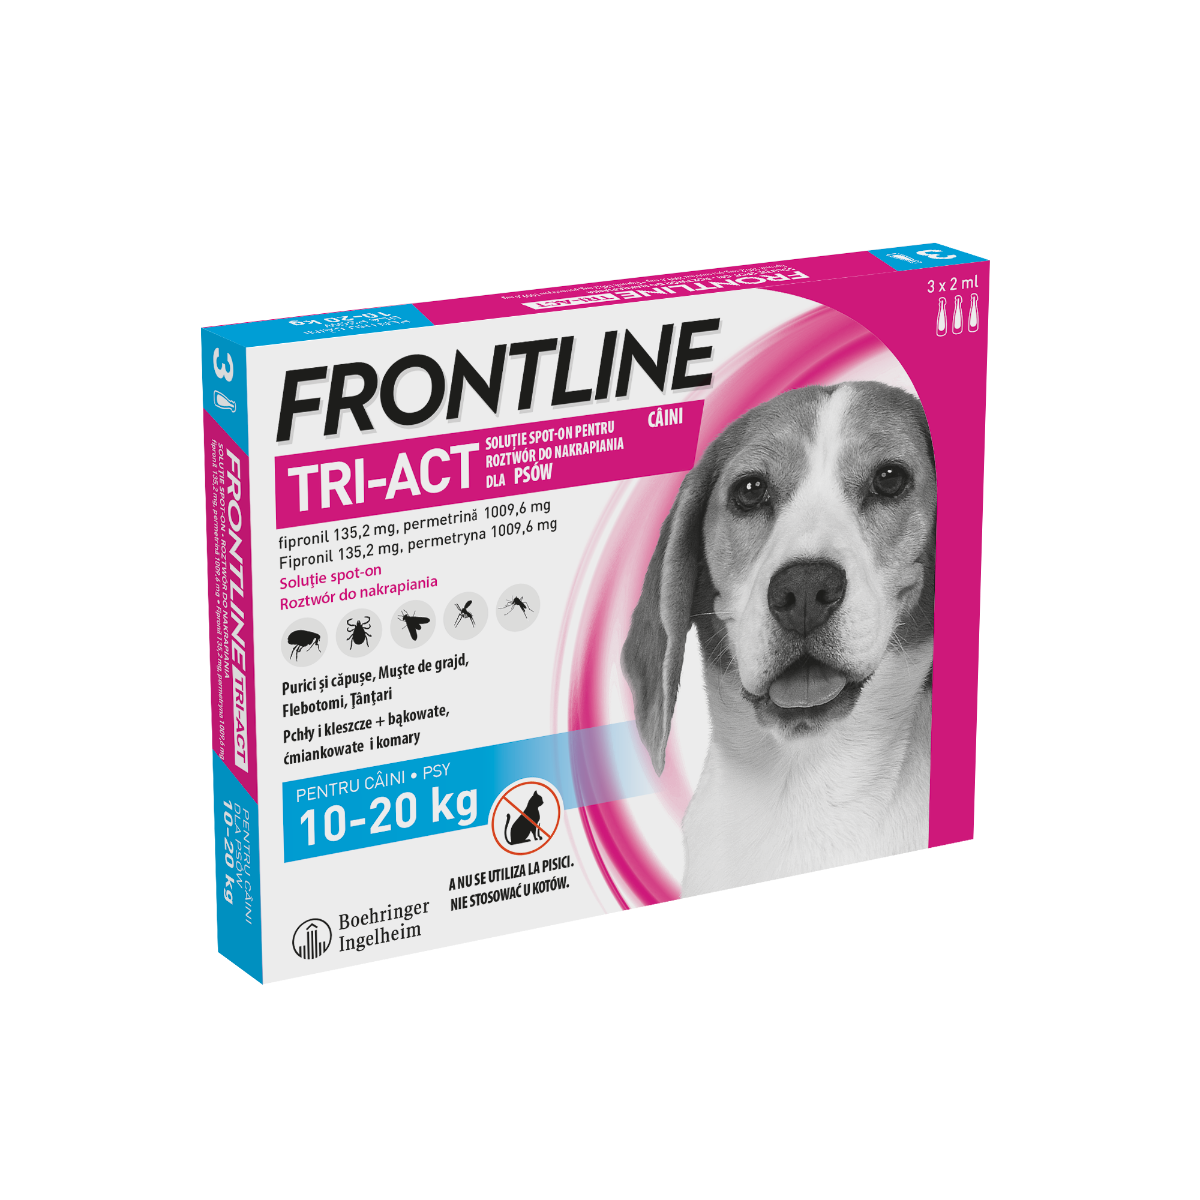 Frontline Tri-Act M soluție spot-on pentru câini 10-20 kg, 3 pipete, Frontline